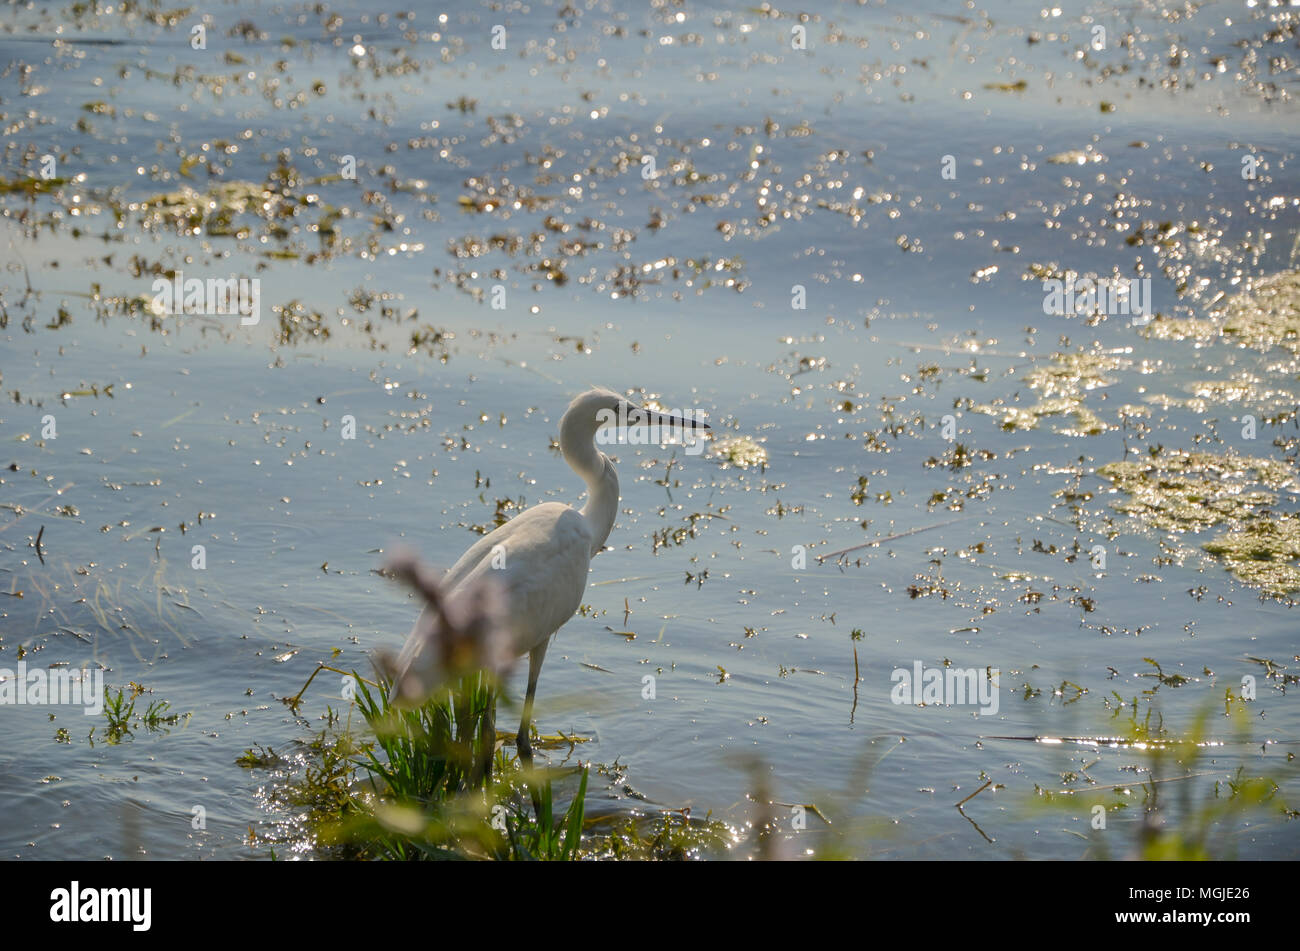 White Heron, on Greenery, near pond water, in forest lake, Long neck, sharp beak, long legs, white feathers, small eyes, thin flexible bird. Stock Photo